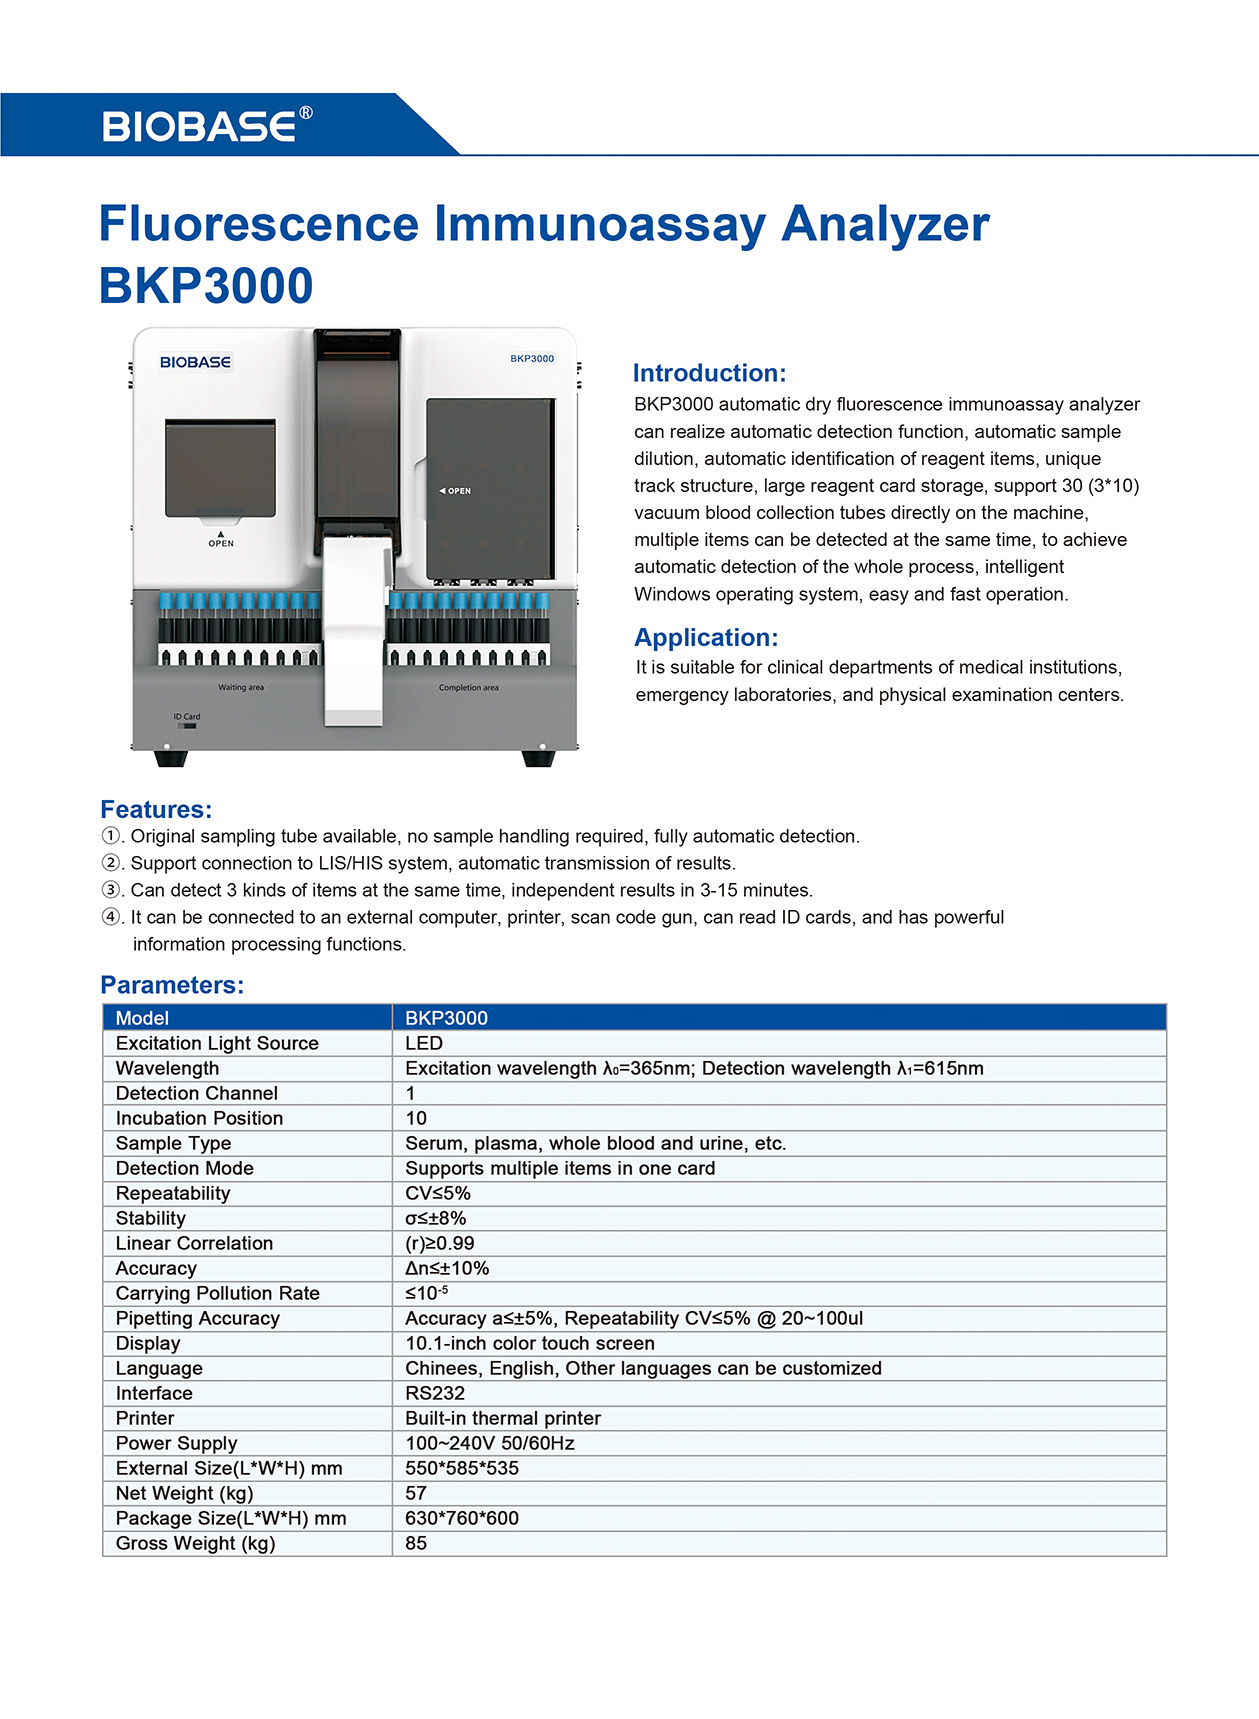 Fluorescence Immunoassay Analyzer BKP3000